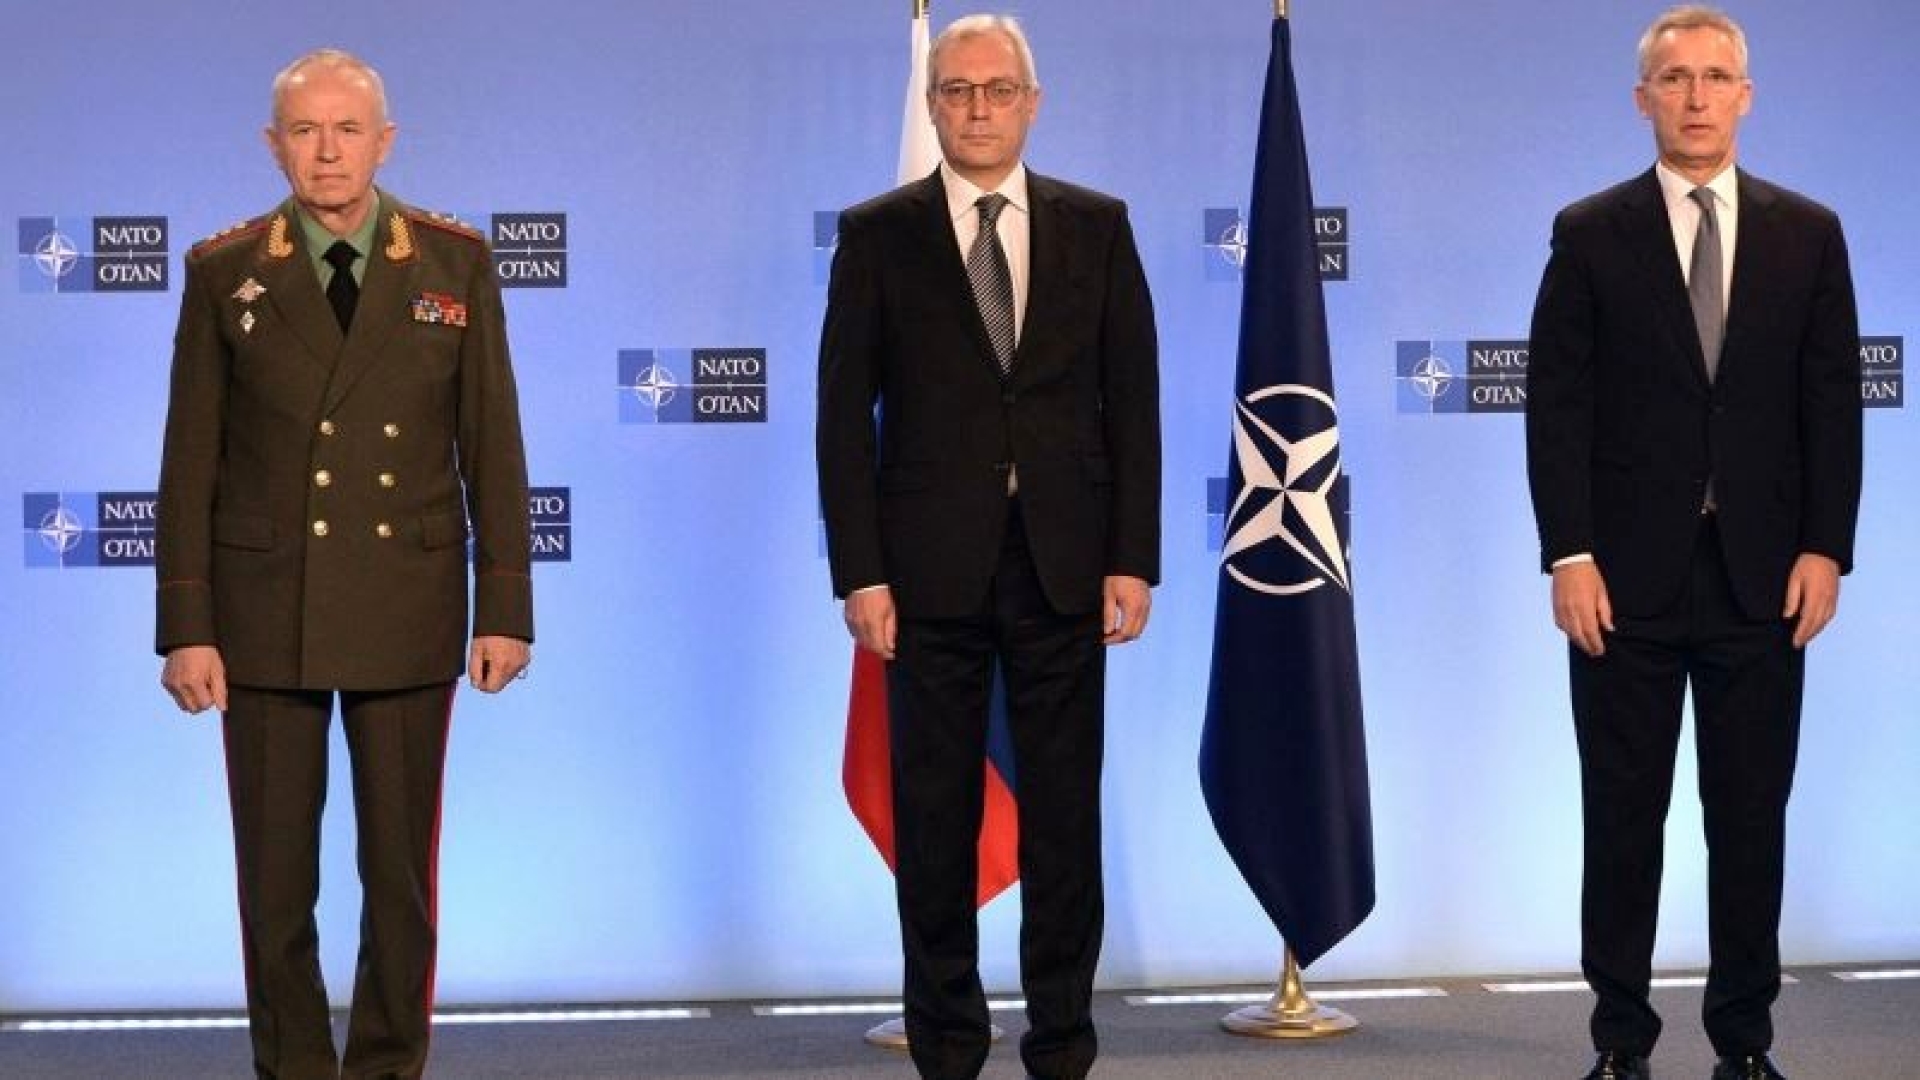 NATO - do we need it?